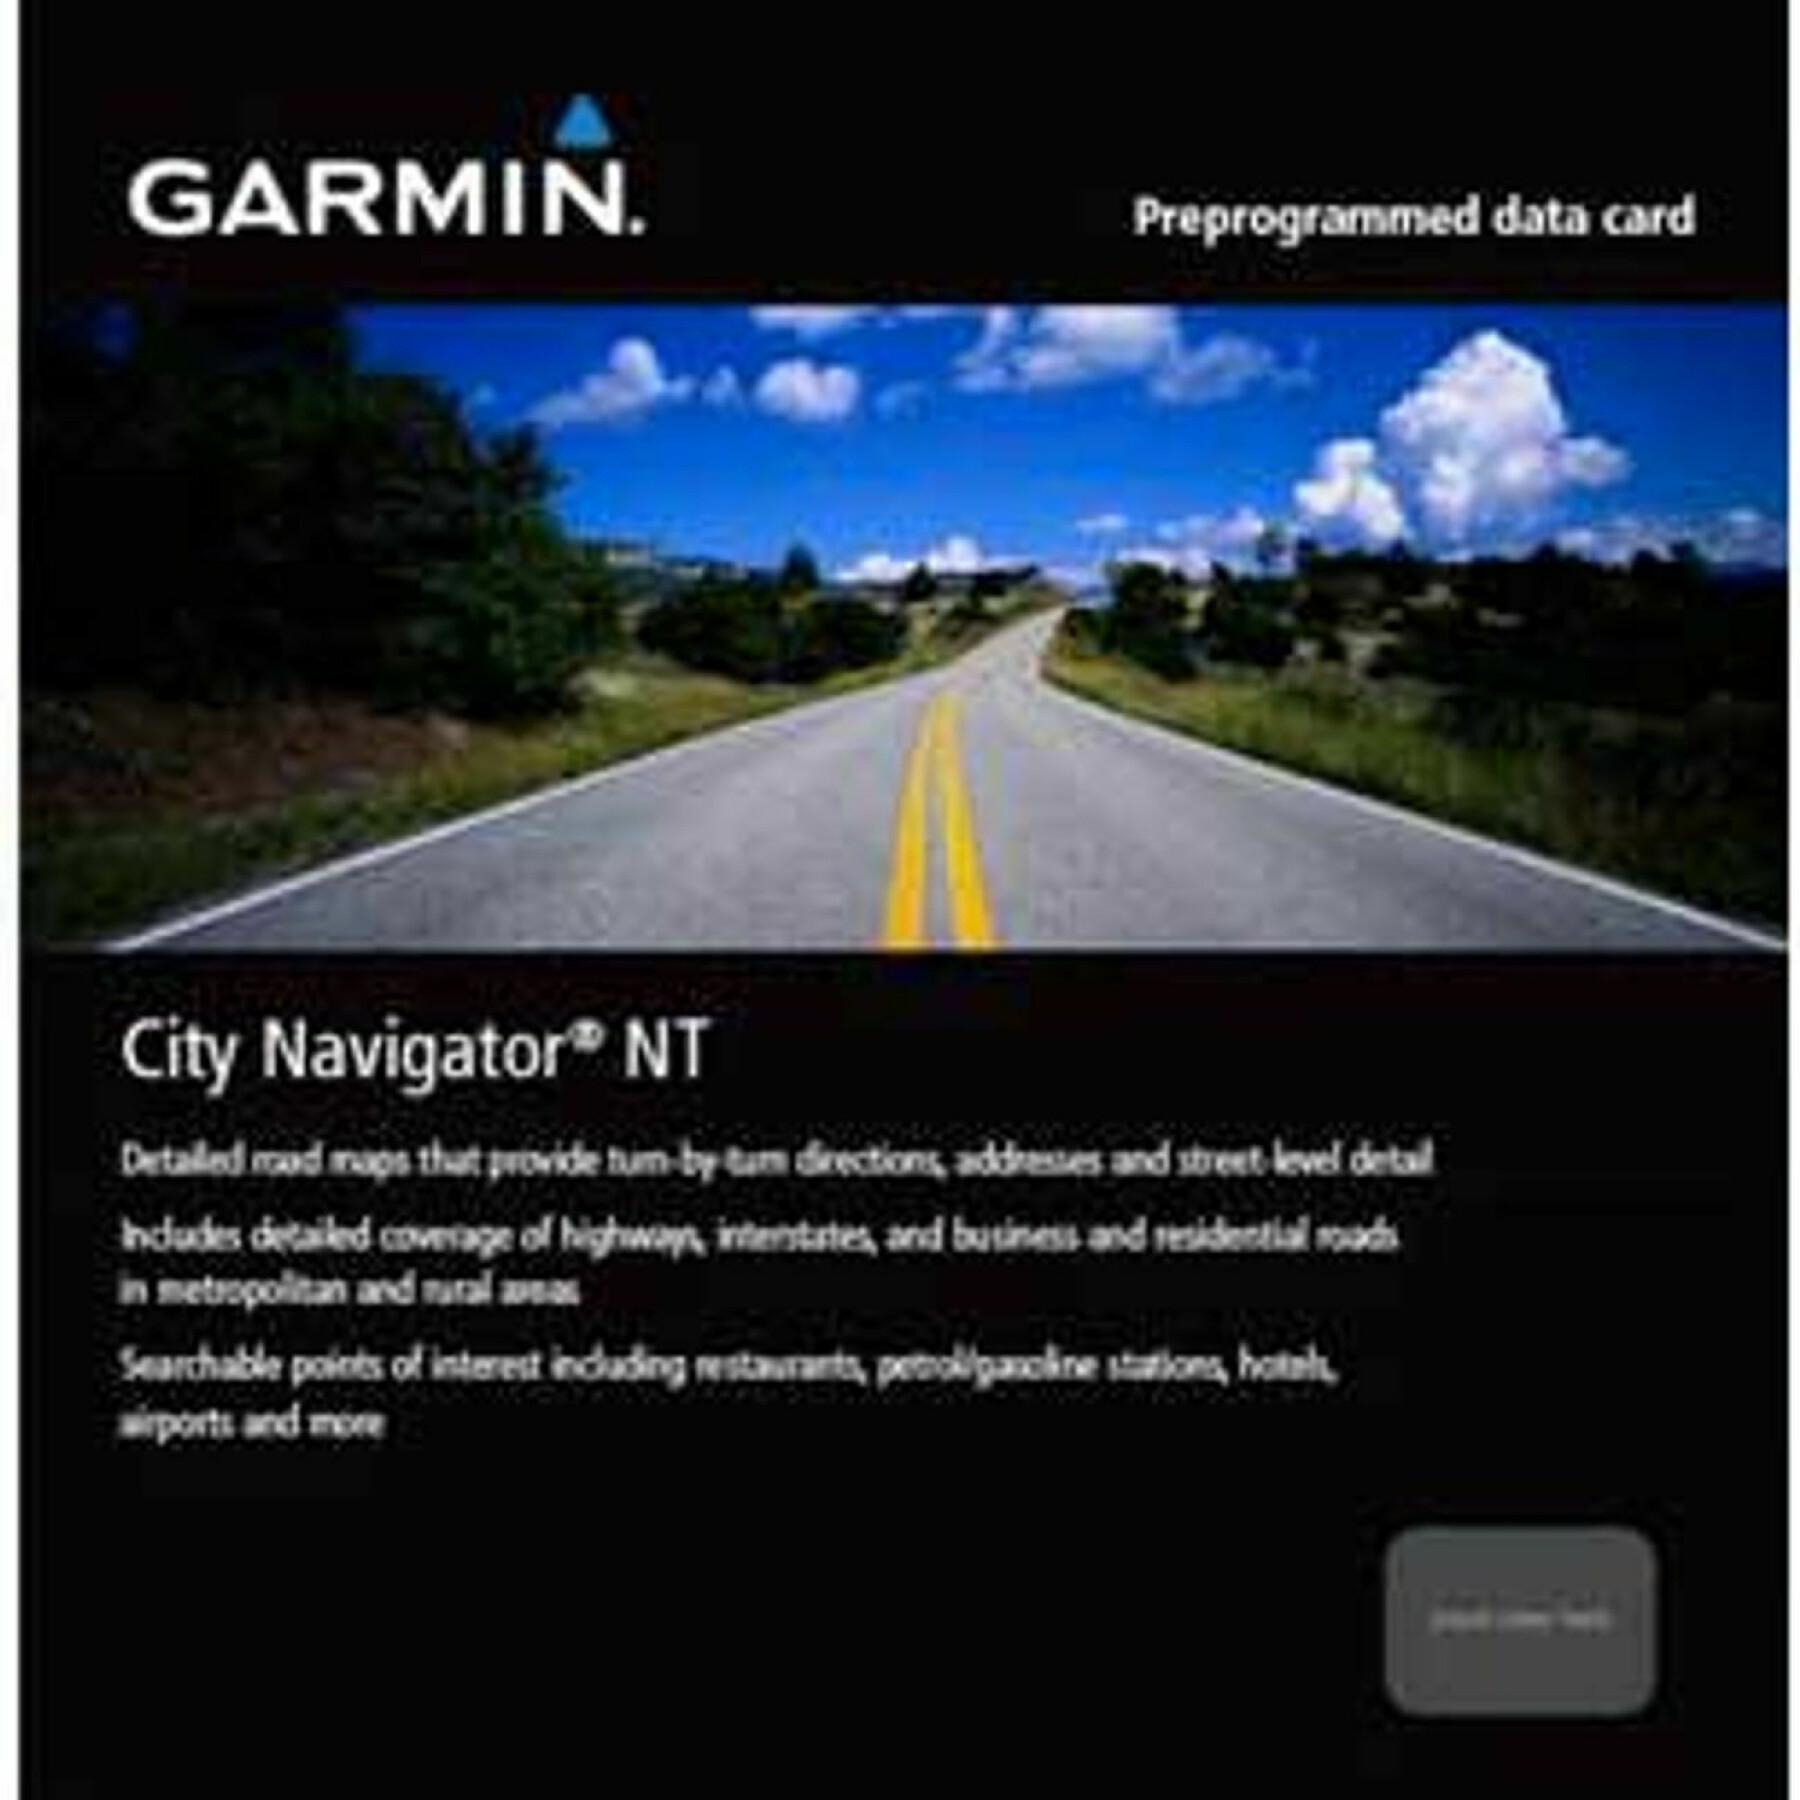 Tarjeta Garmin city navigator Europe nt-spain/portugal microsd/sd card